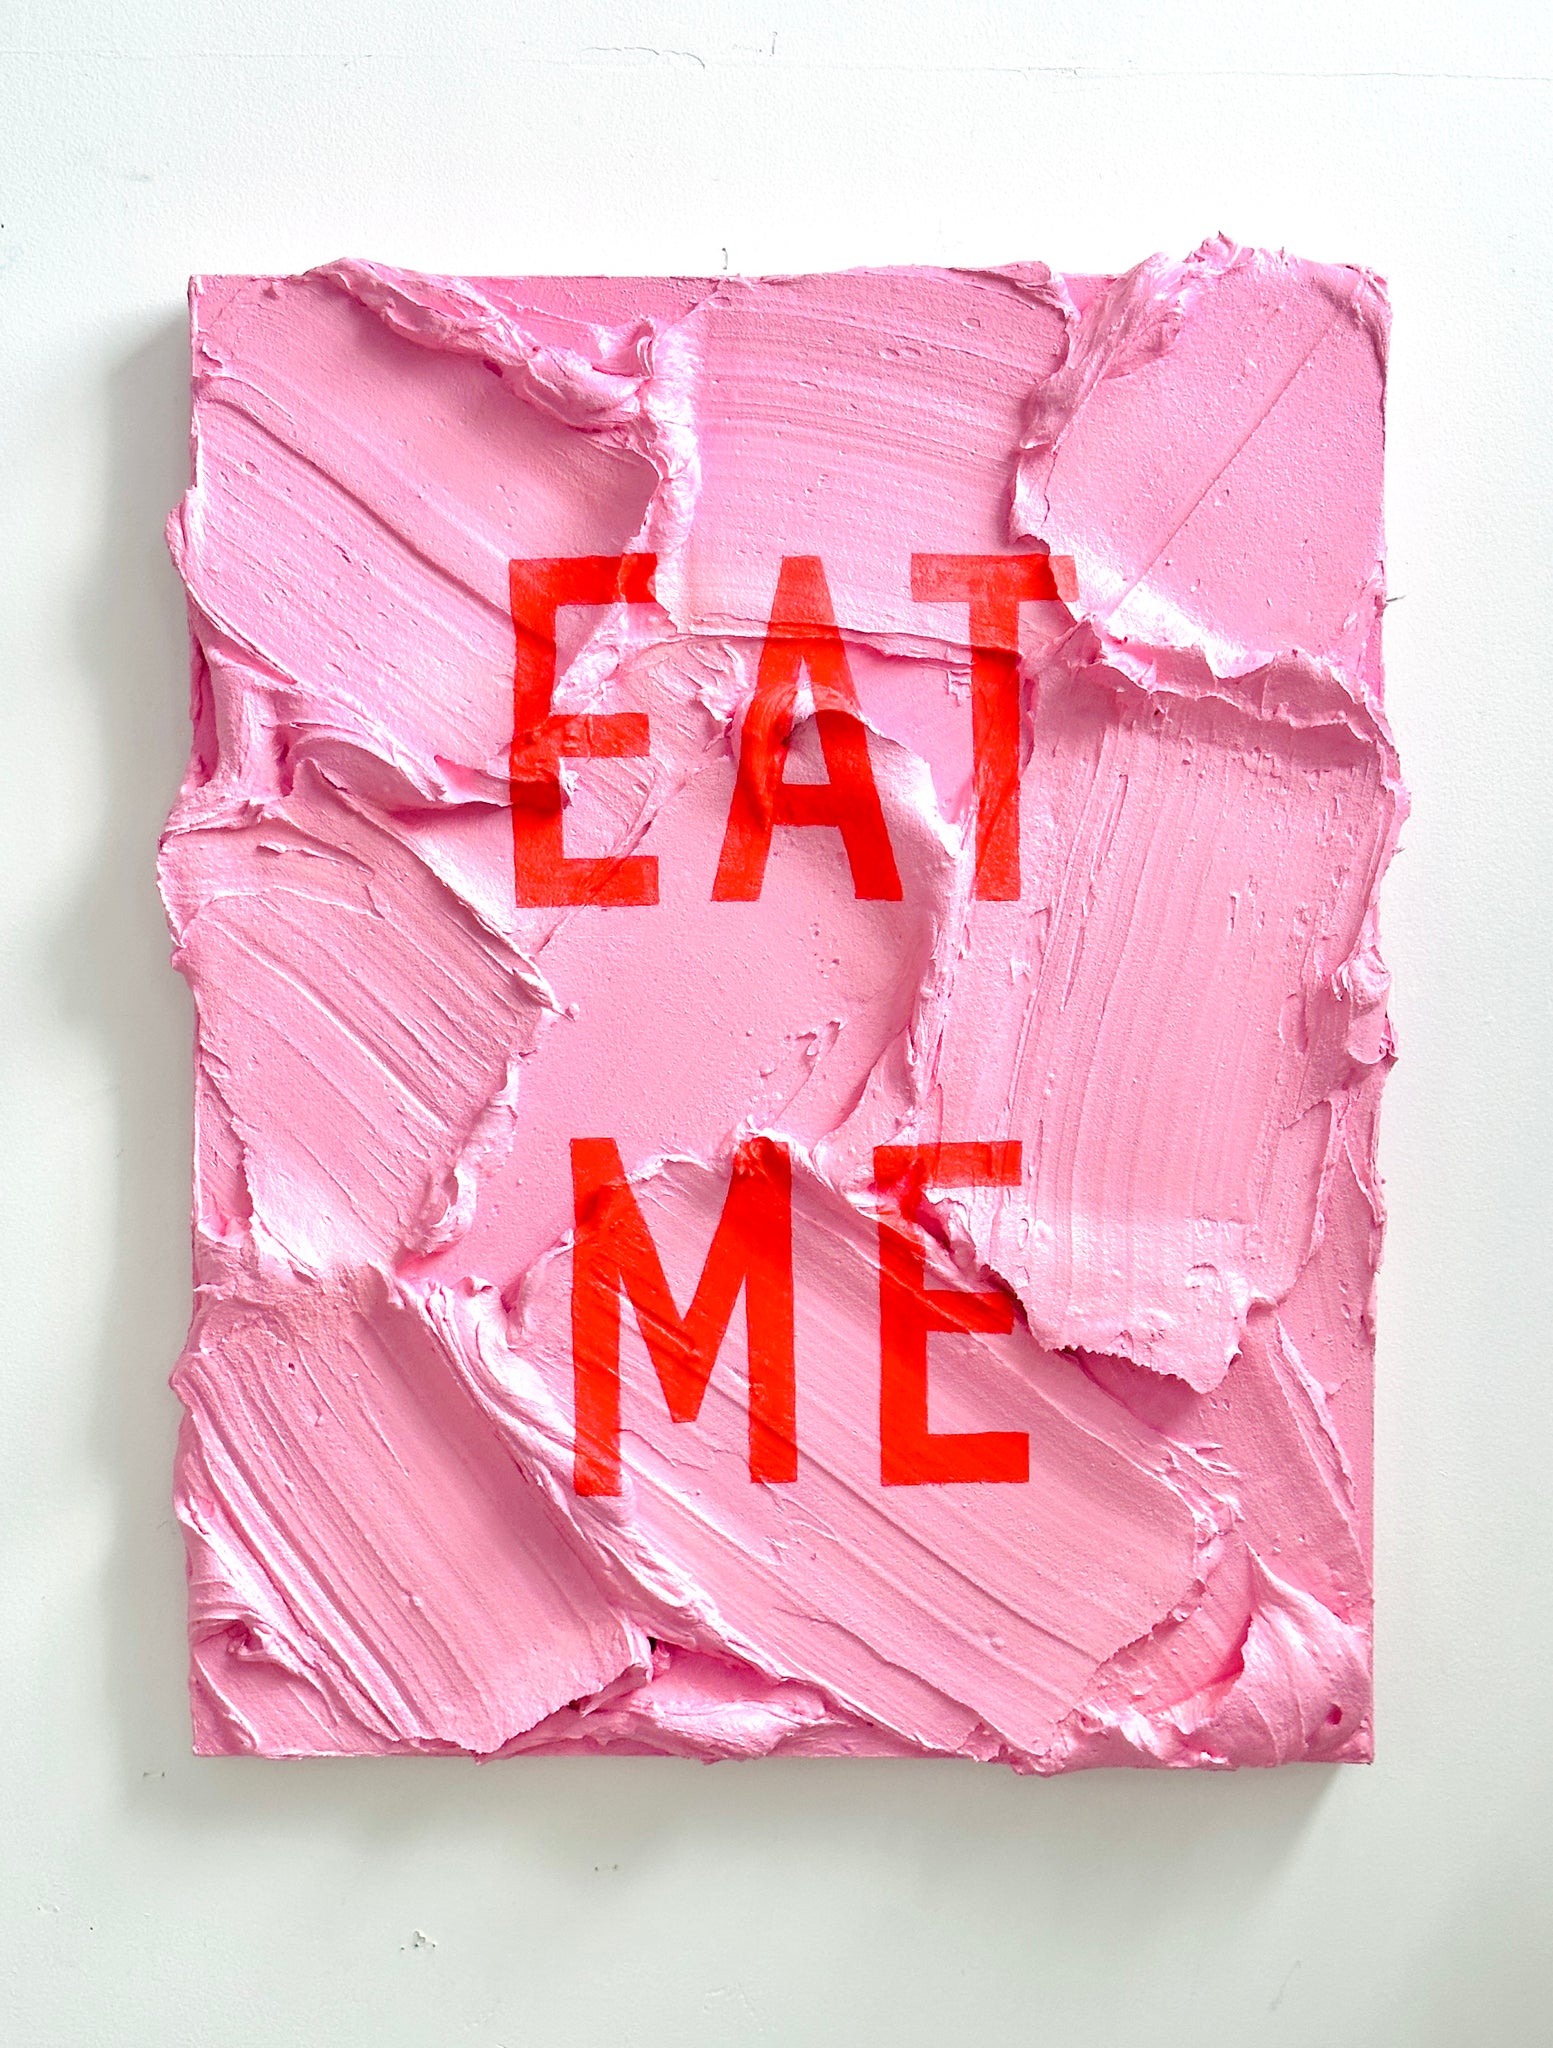 Eat Me - Pigmented Concrete